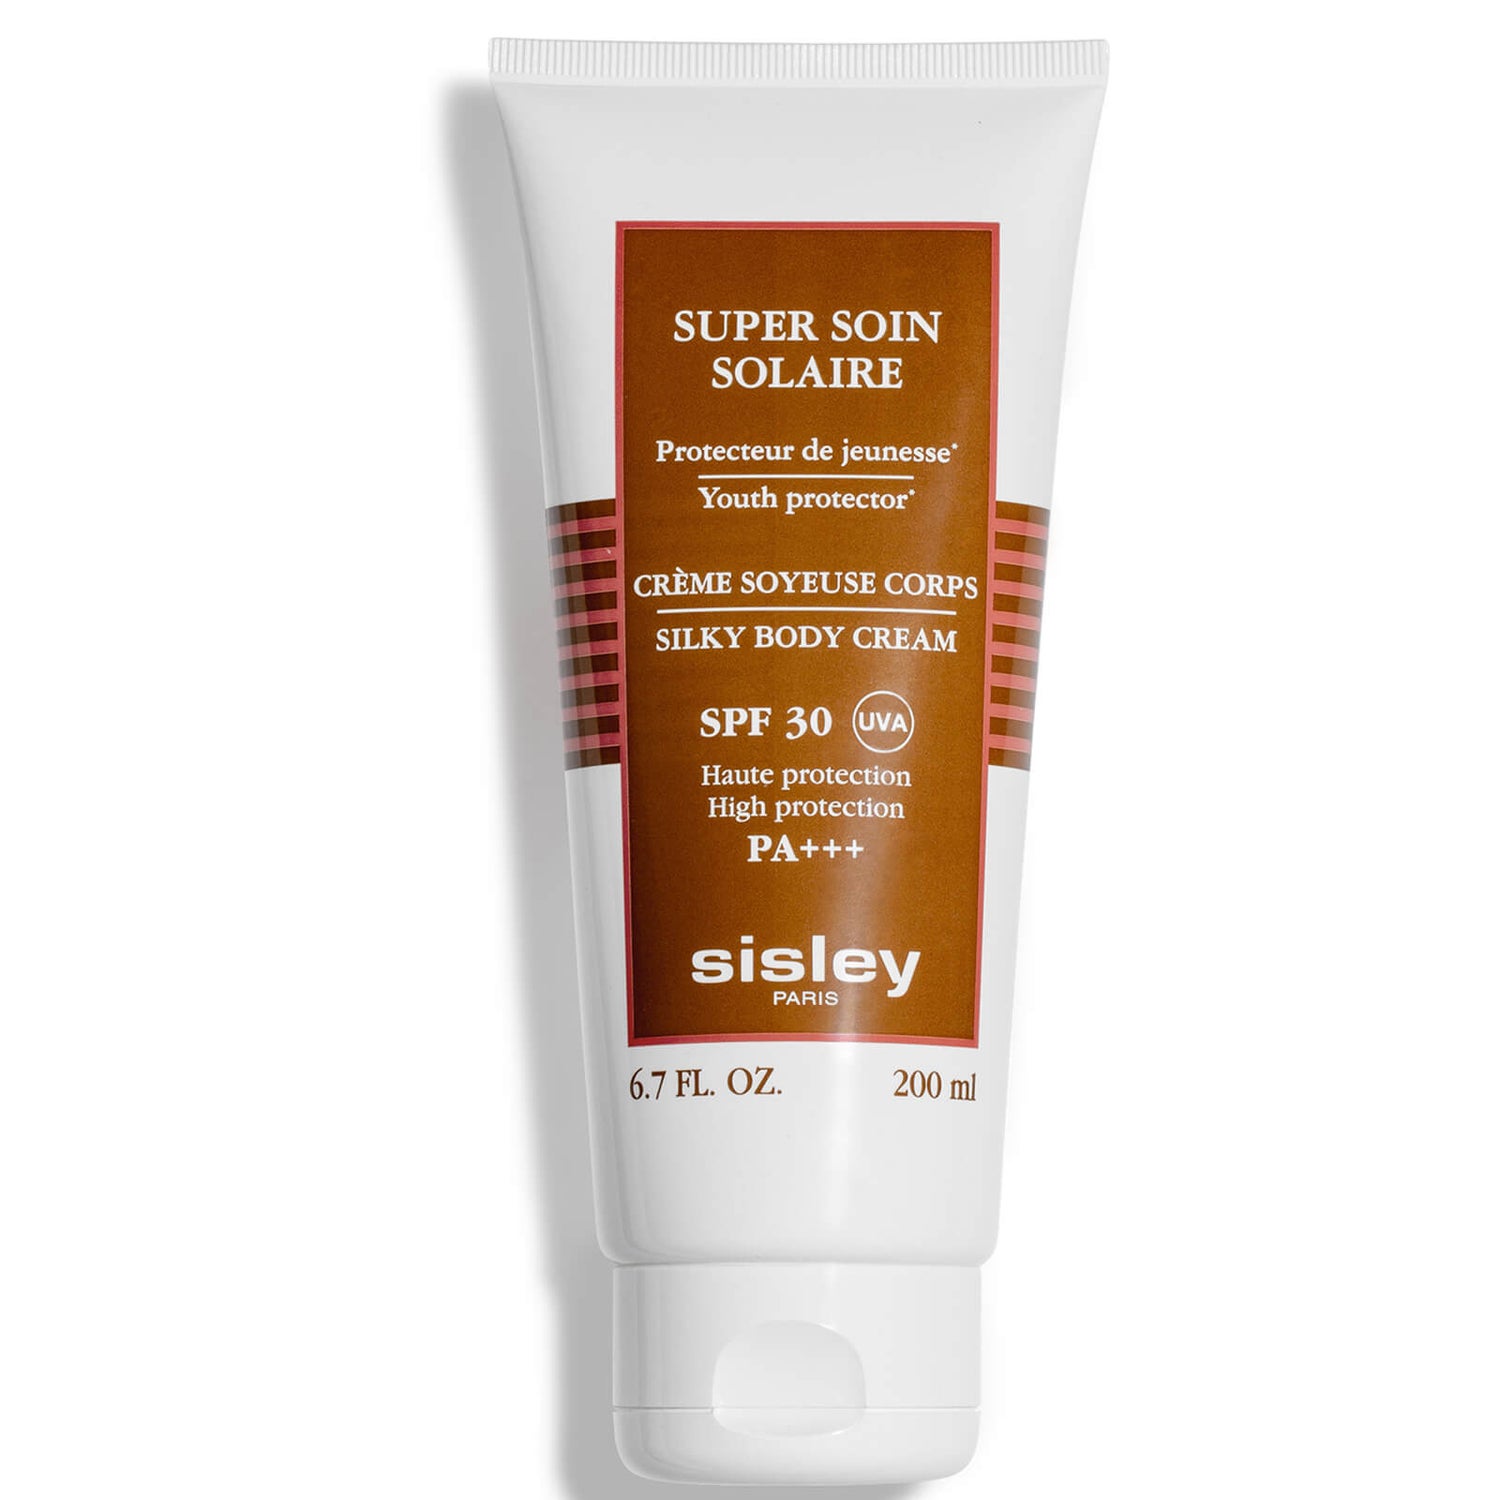 SISLEY-PARIS Super Soin Solaire Silky Body Cream SPF30 200ml